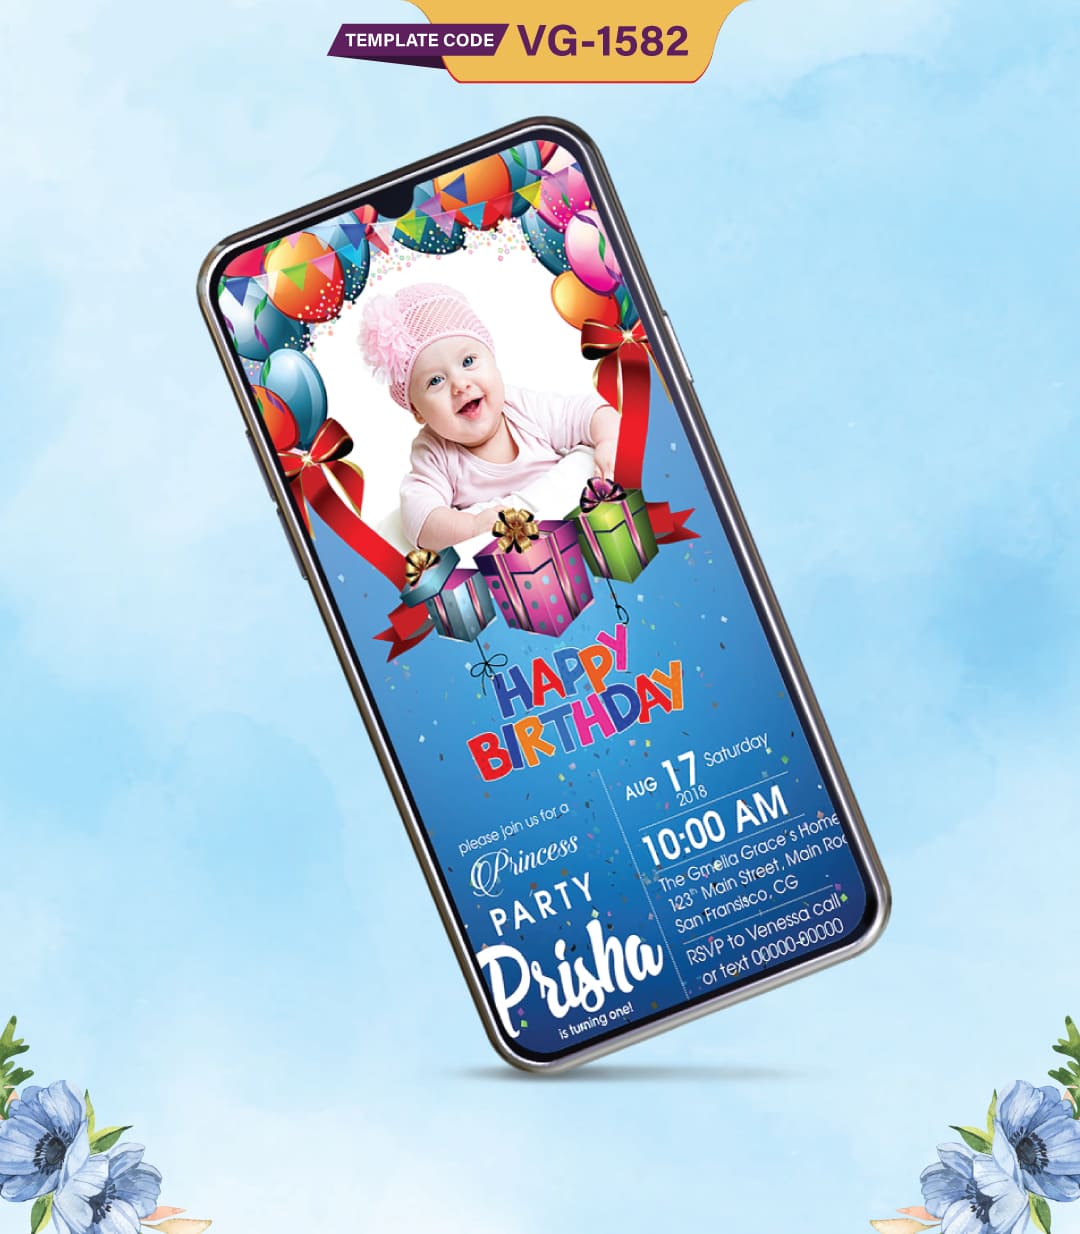 Digital Birthday Party Invitation Card